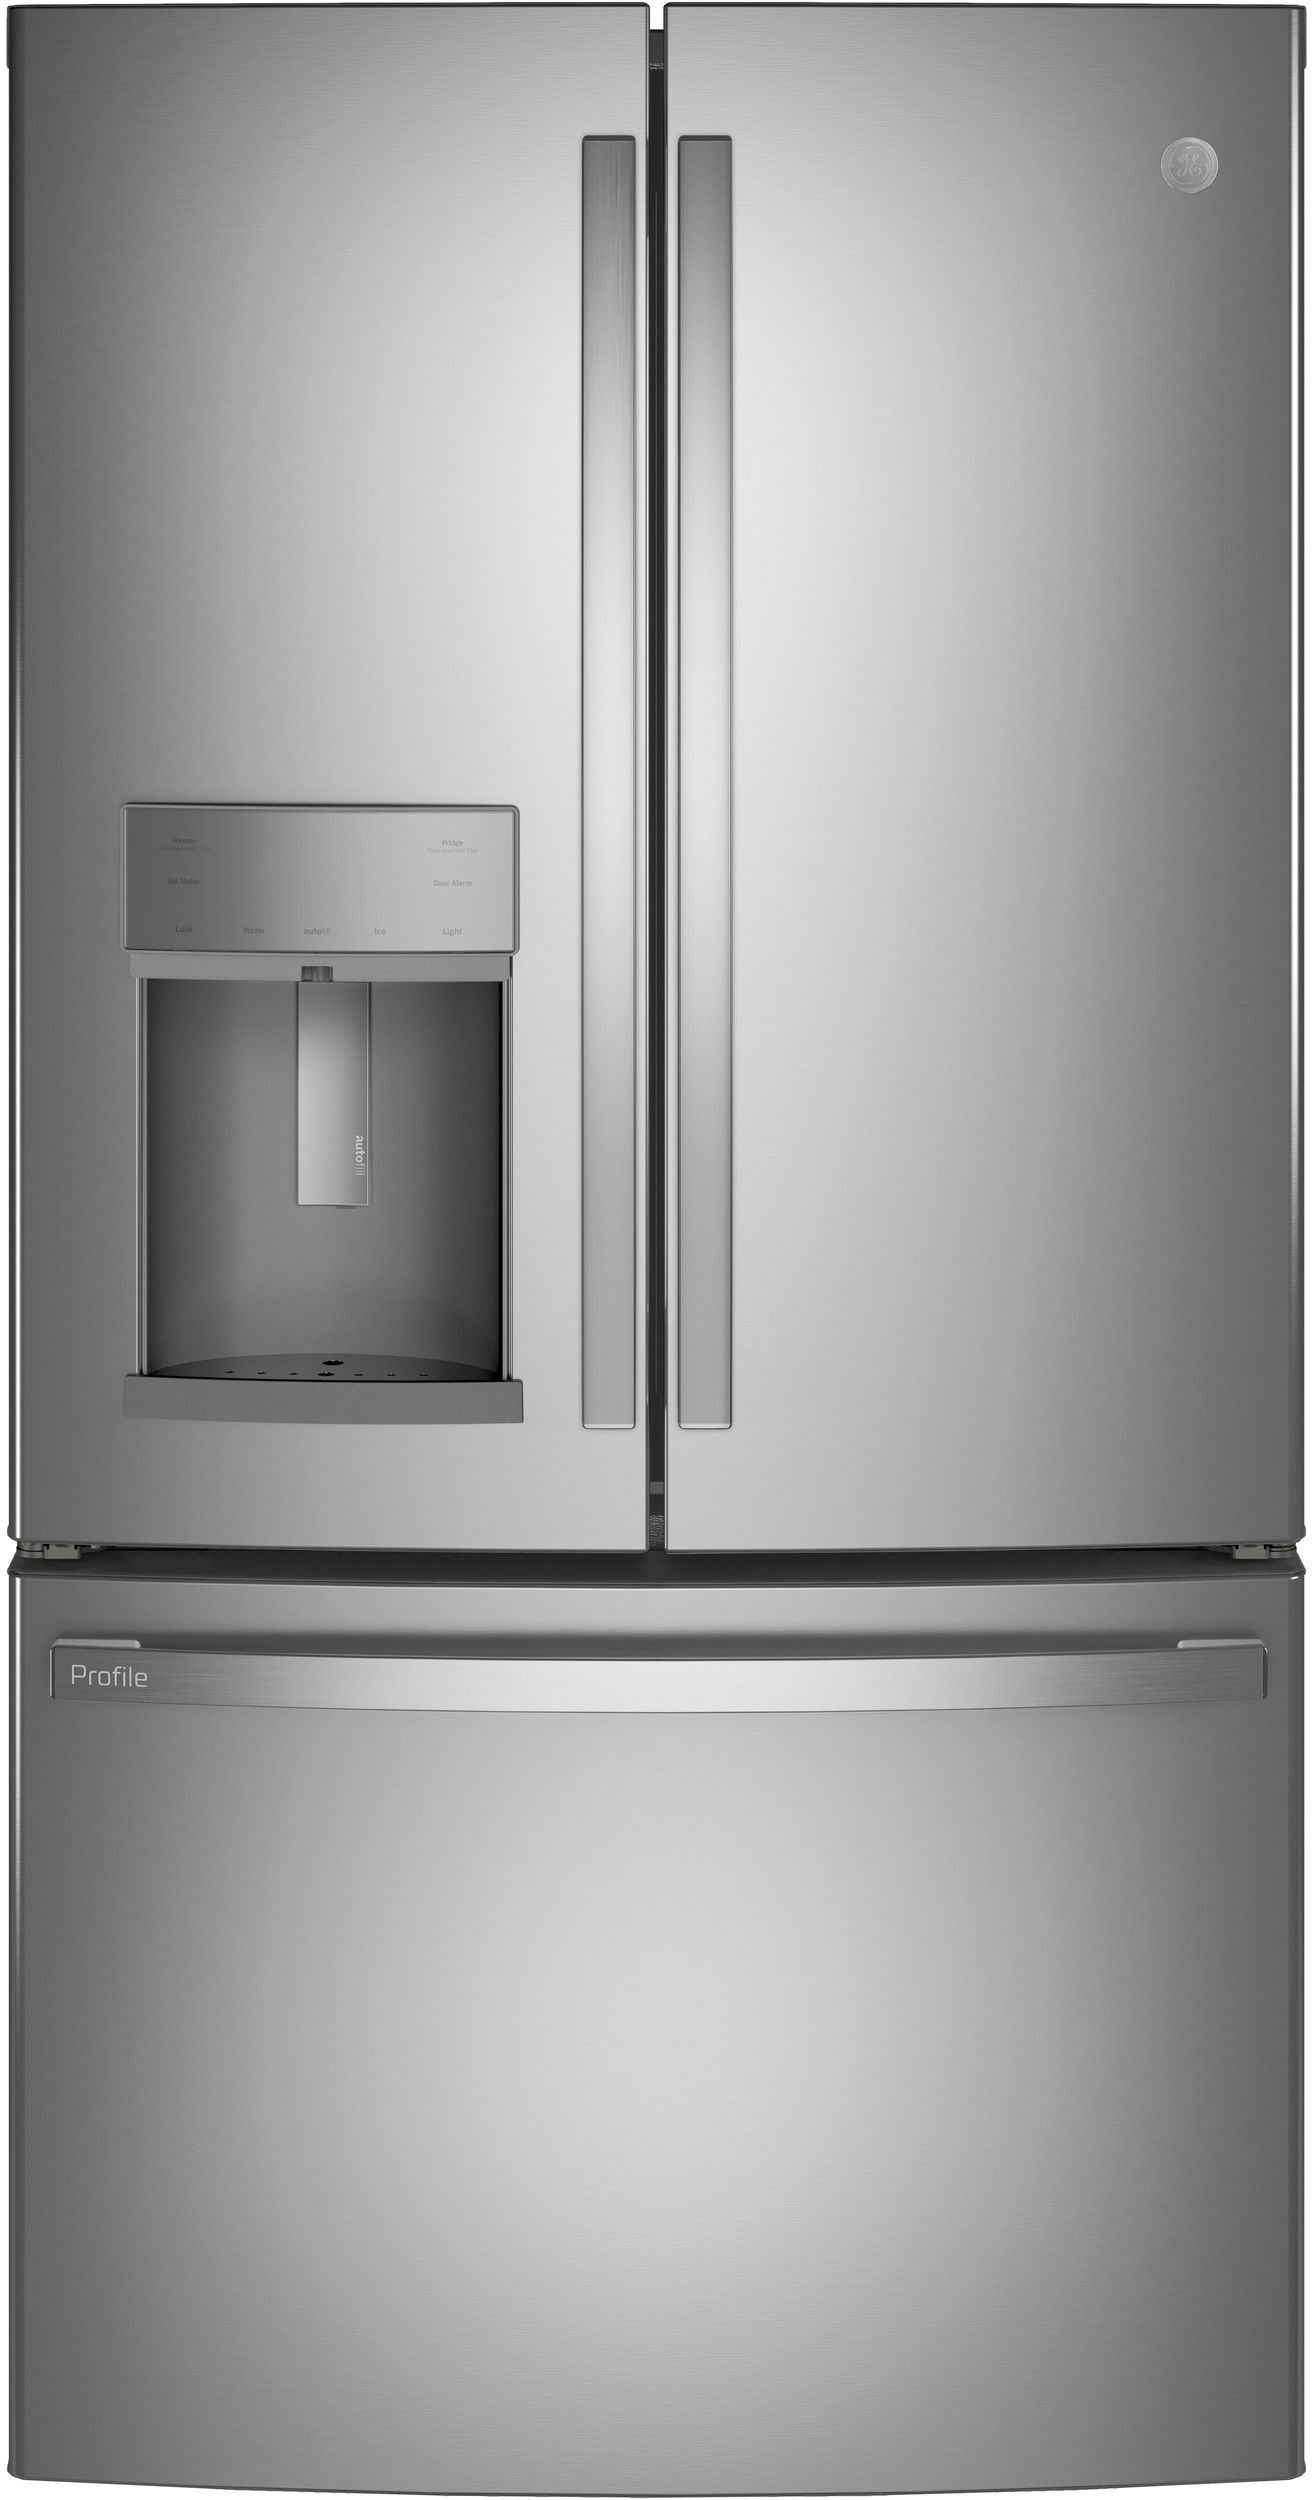 GE Profile™ Fingerprint Resistant Stainless Steel 22.1 Cu. Ft. Counter Depth French Door Refrigerator